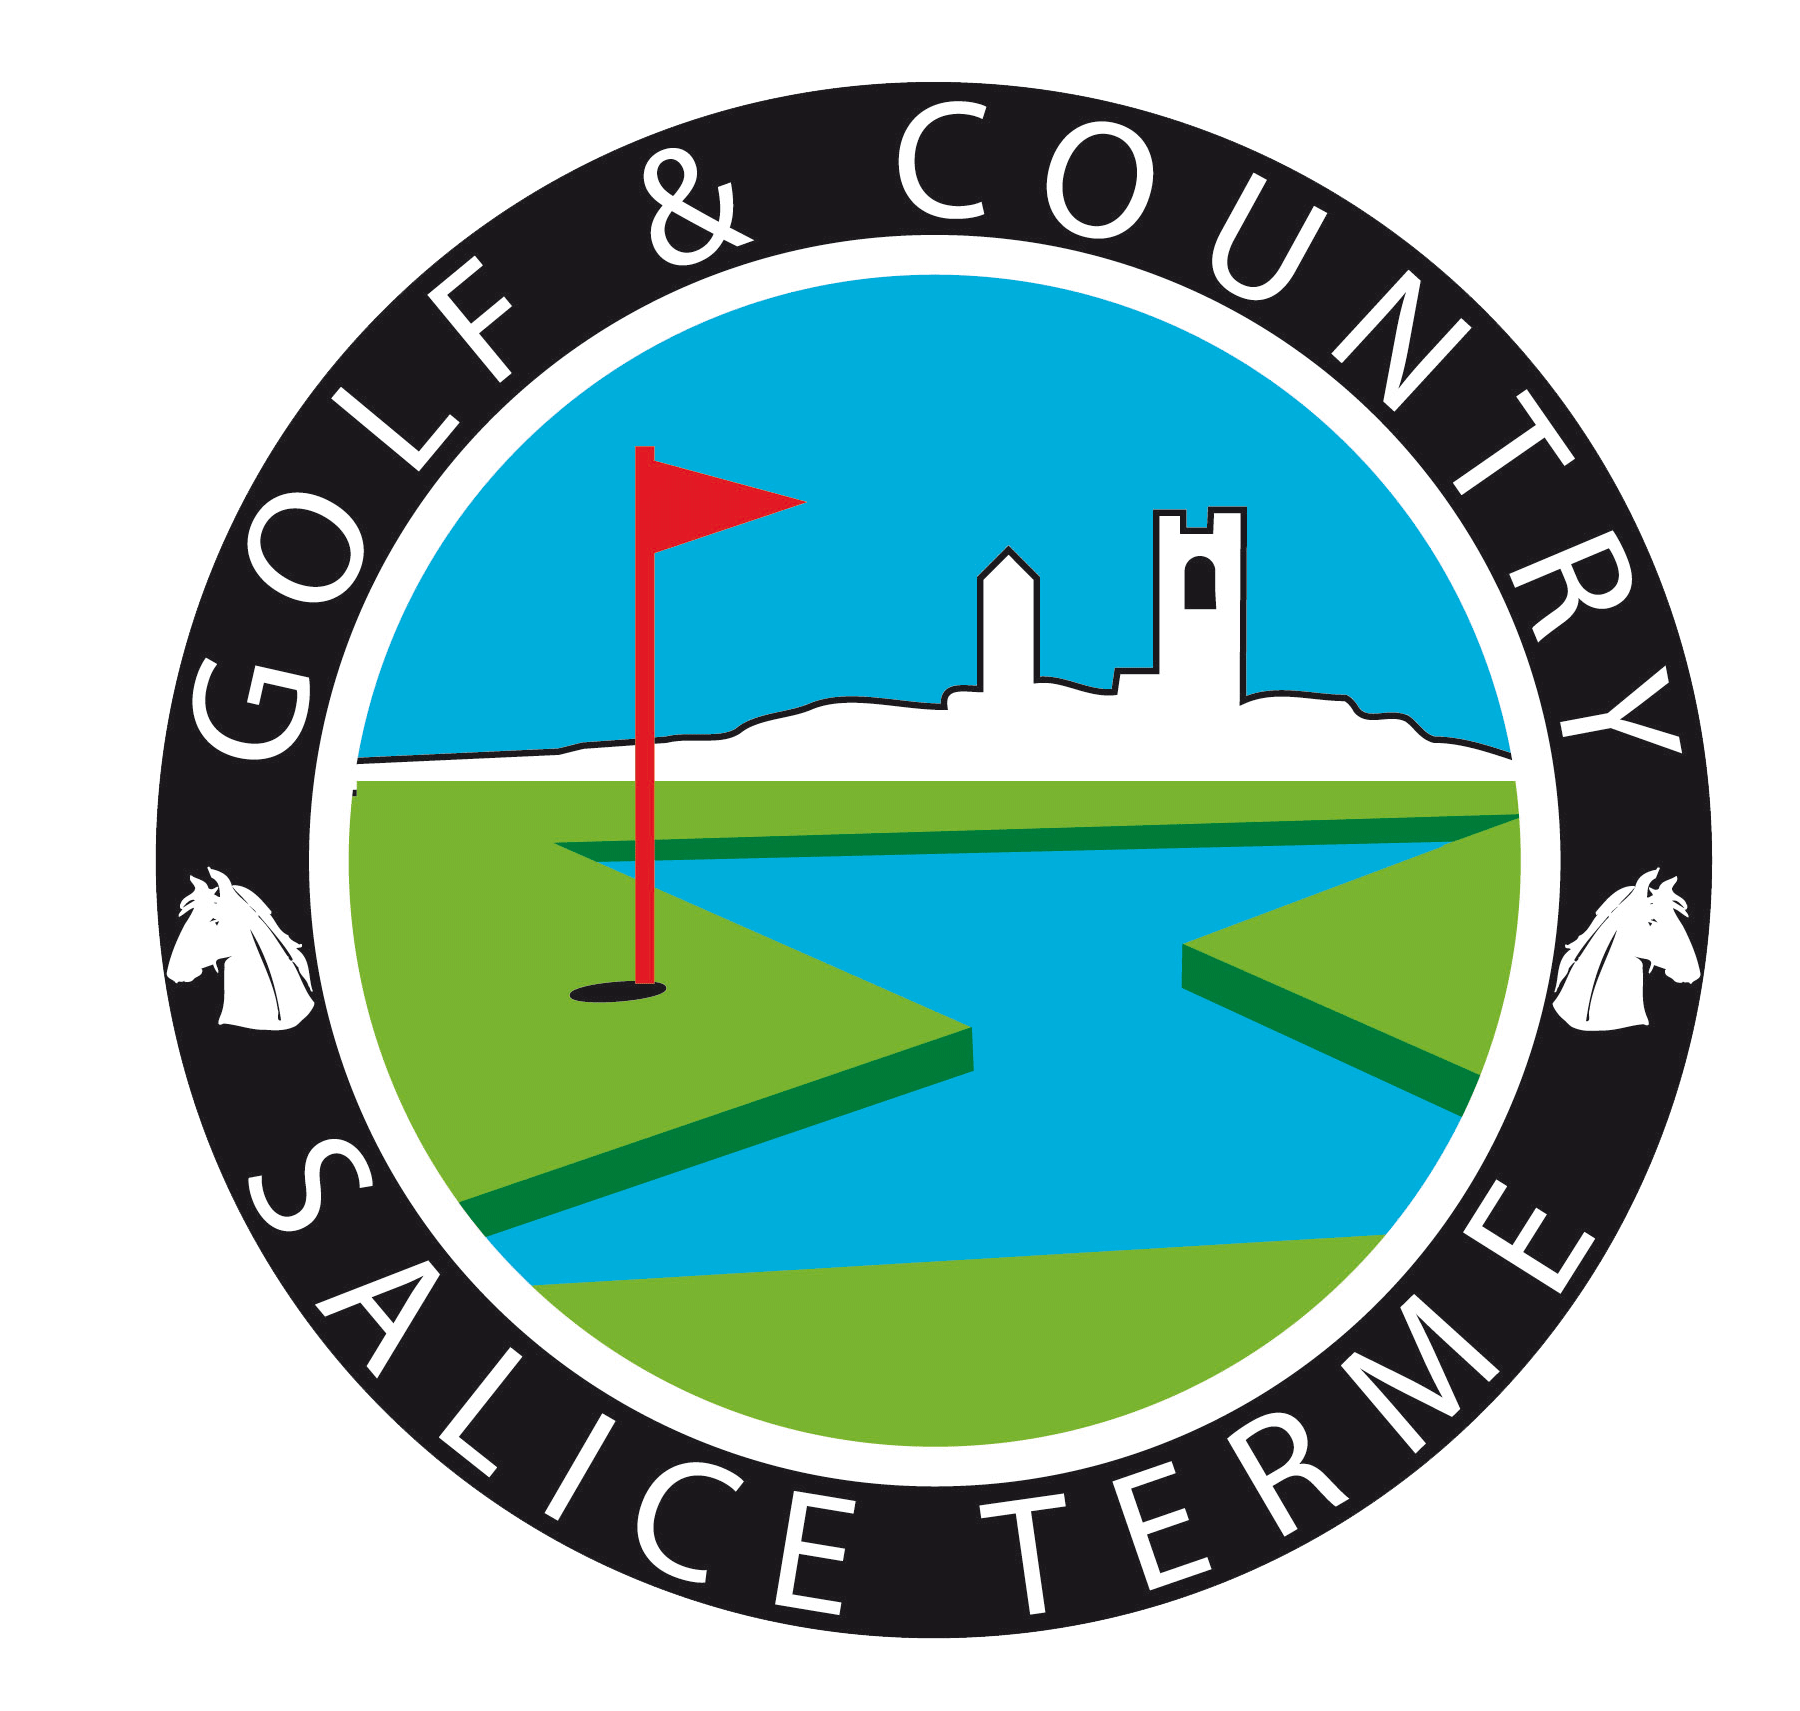 Golf Club Salice Terme